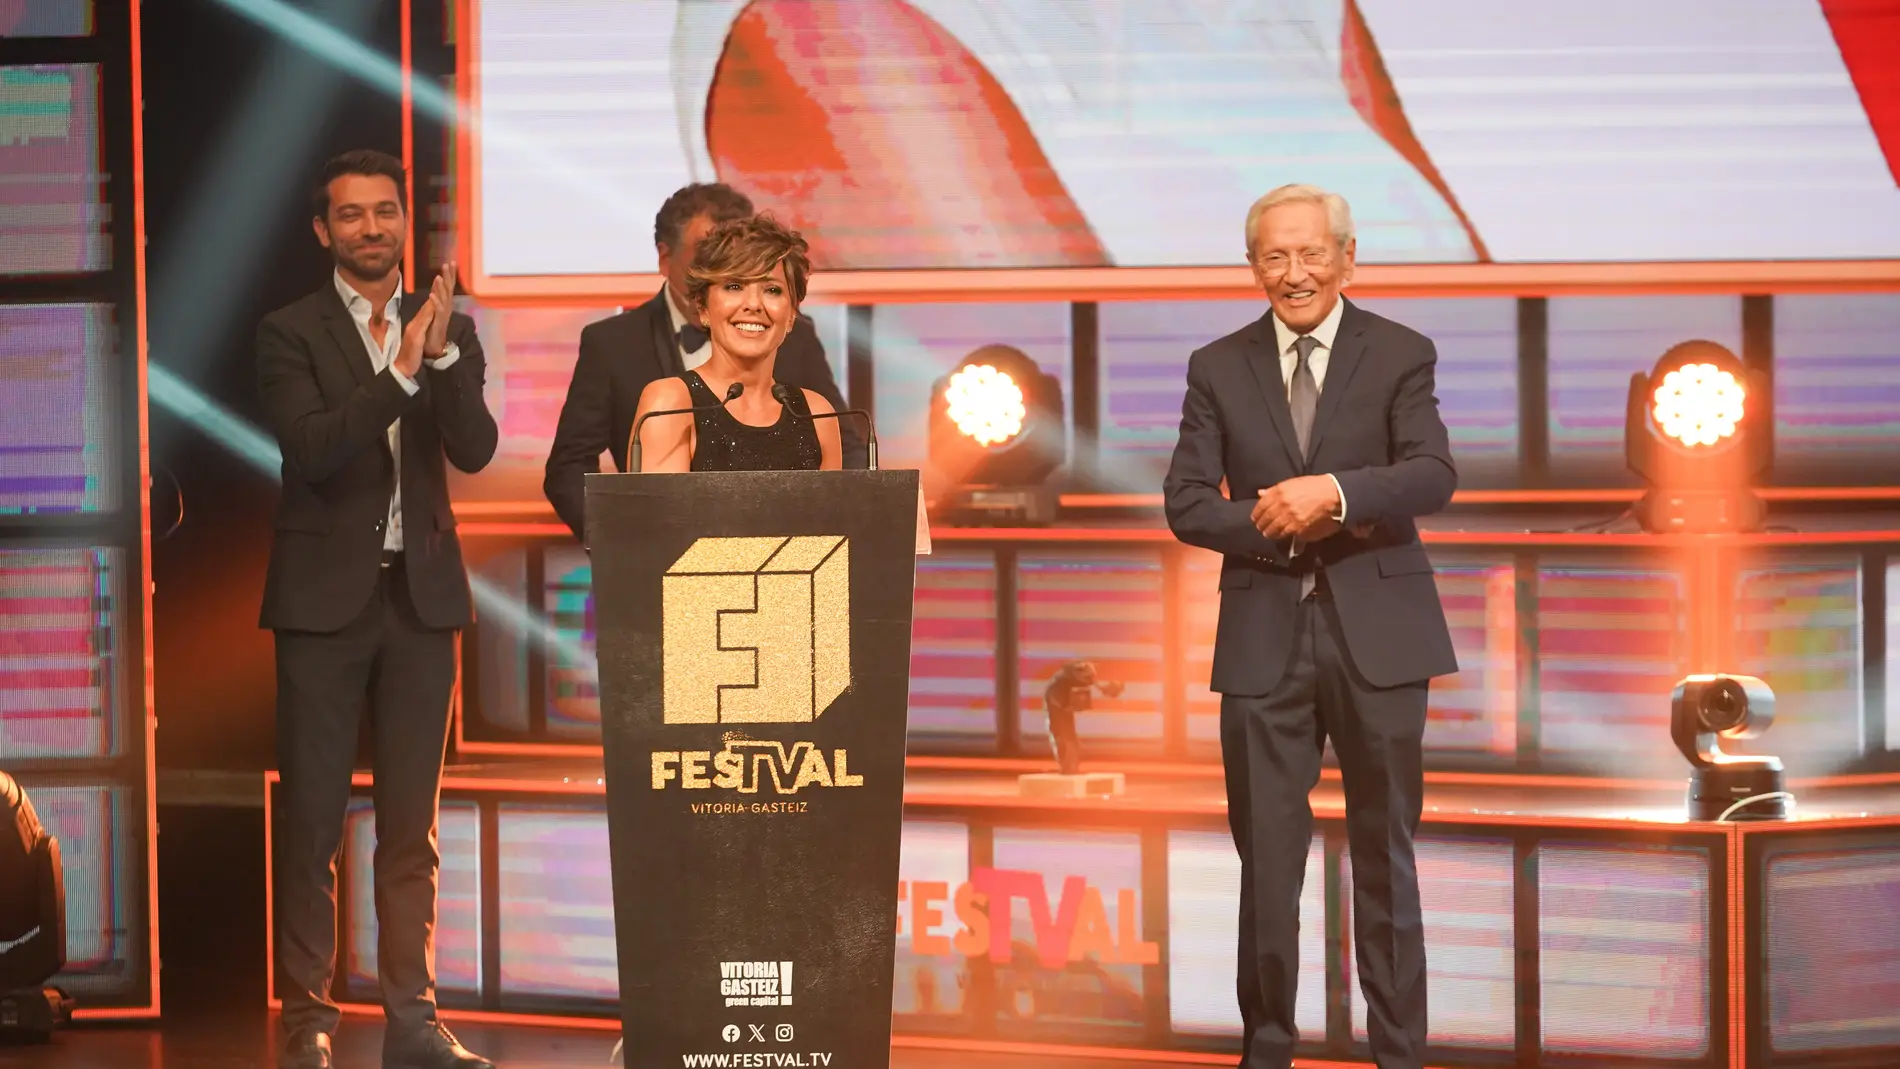 Sonsoles Ónega recibe el premio Joan Ramón Mainat del FesTVal de Vitoria